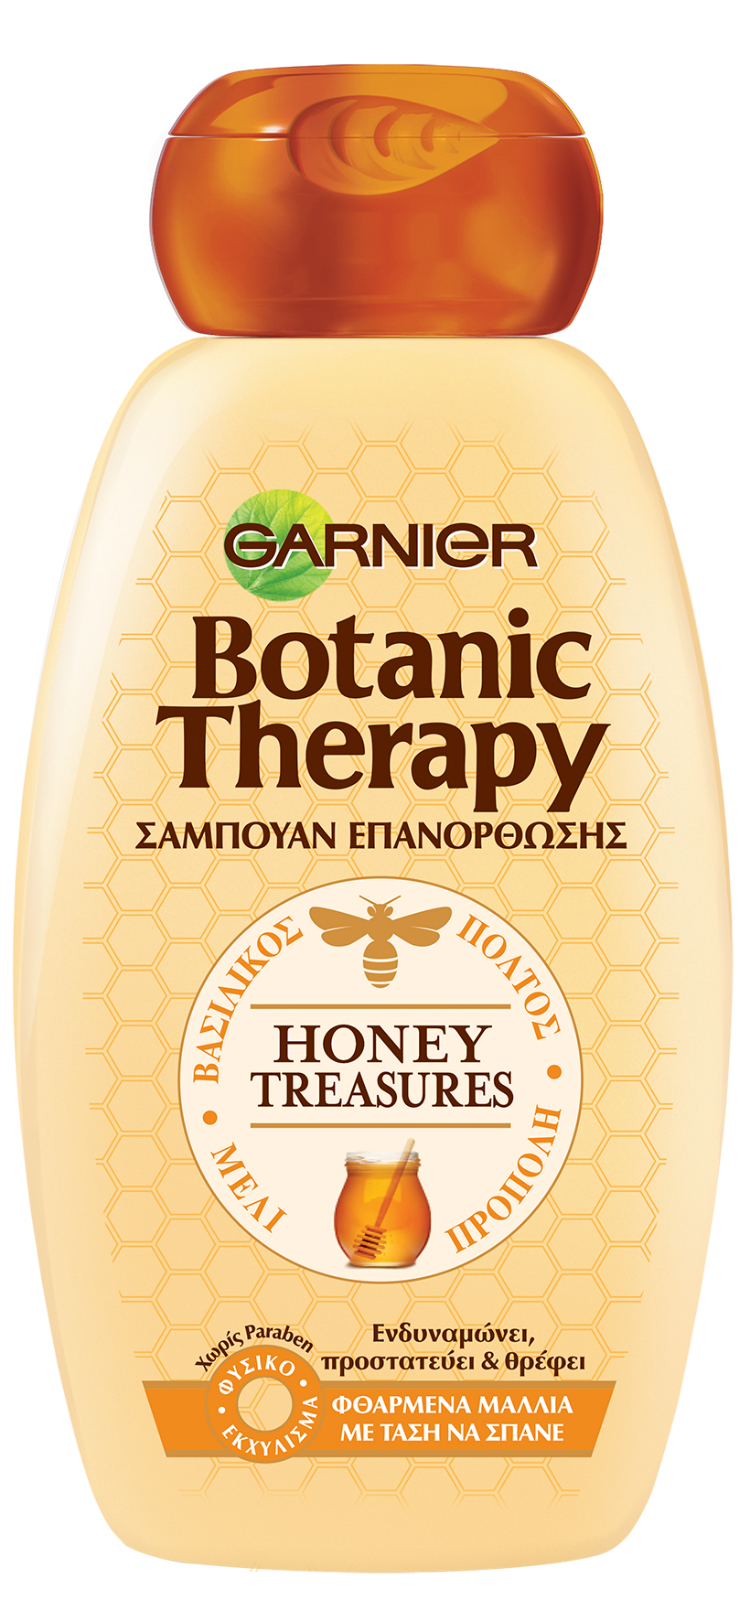 botanictherapy-02.jpg